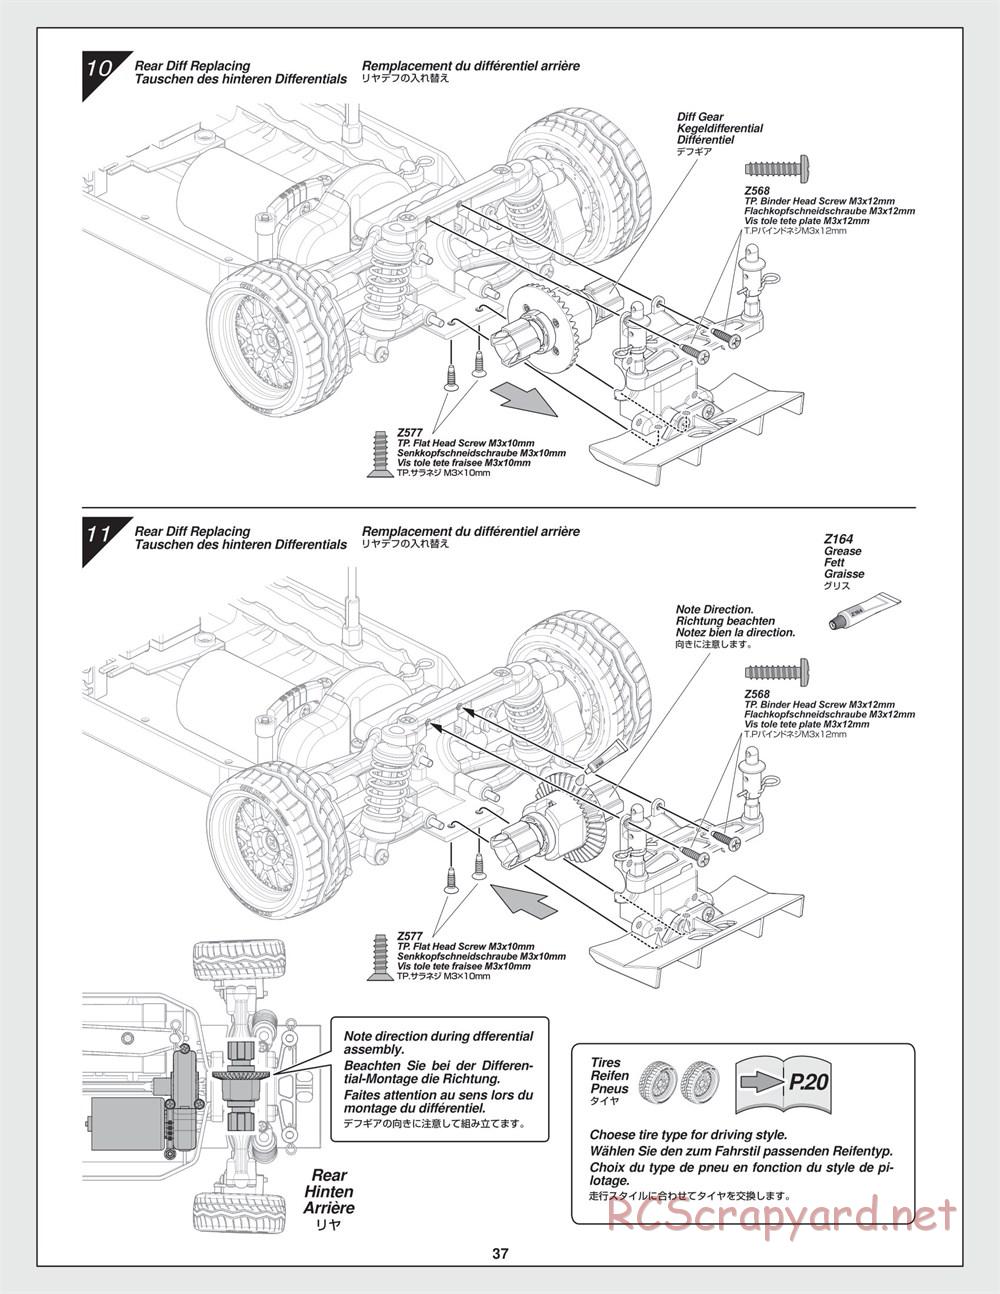 HPI - E10 Drift - Manual - Page 37